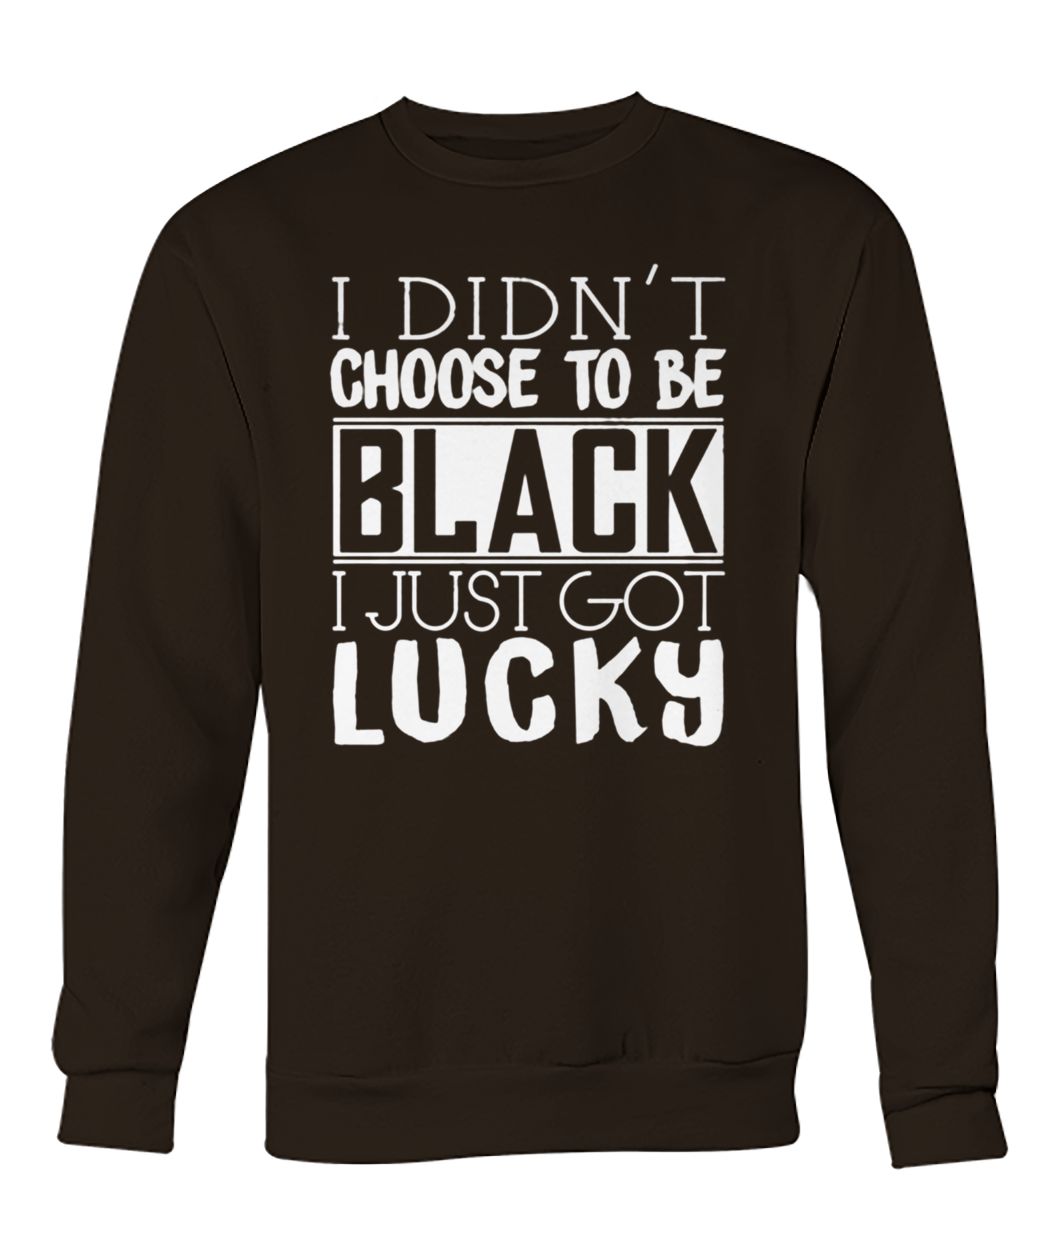 I didn't choose to be black I just got lucky crew neck sweatshirt